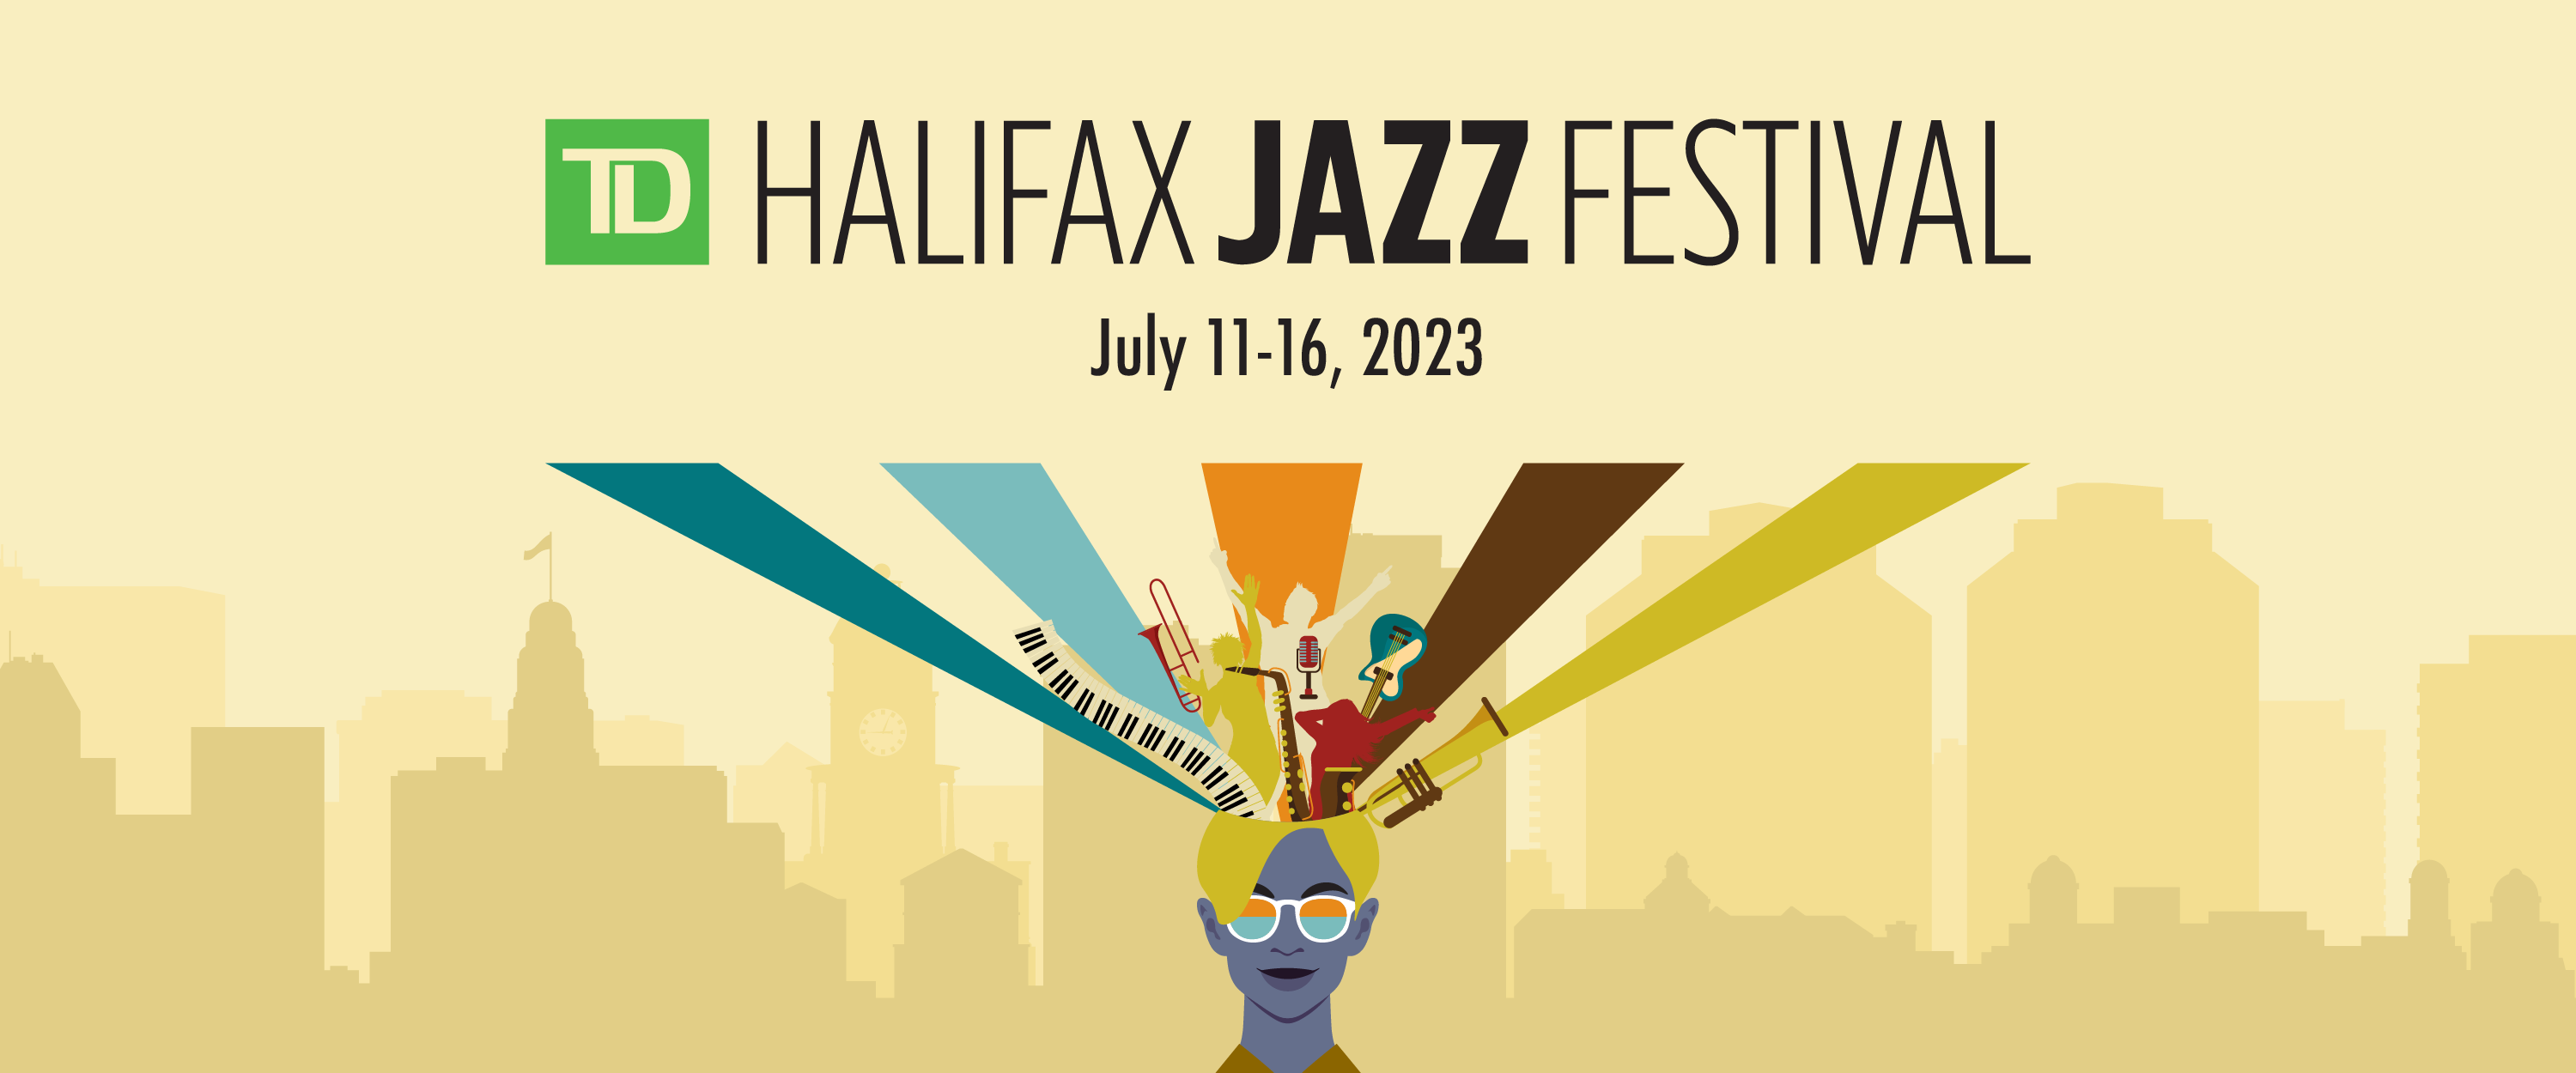 2023 TD Halifax Jazz Festival Standard Pass Tickets at TD Main Stage Salter Lot in Halifax